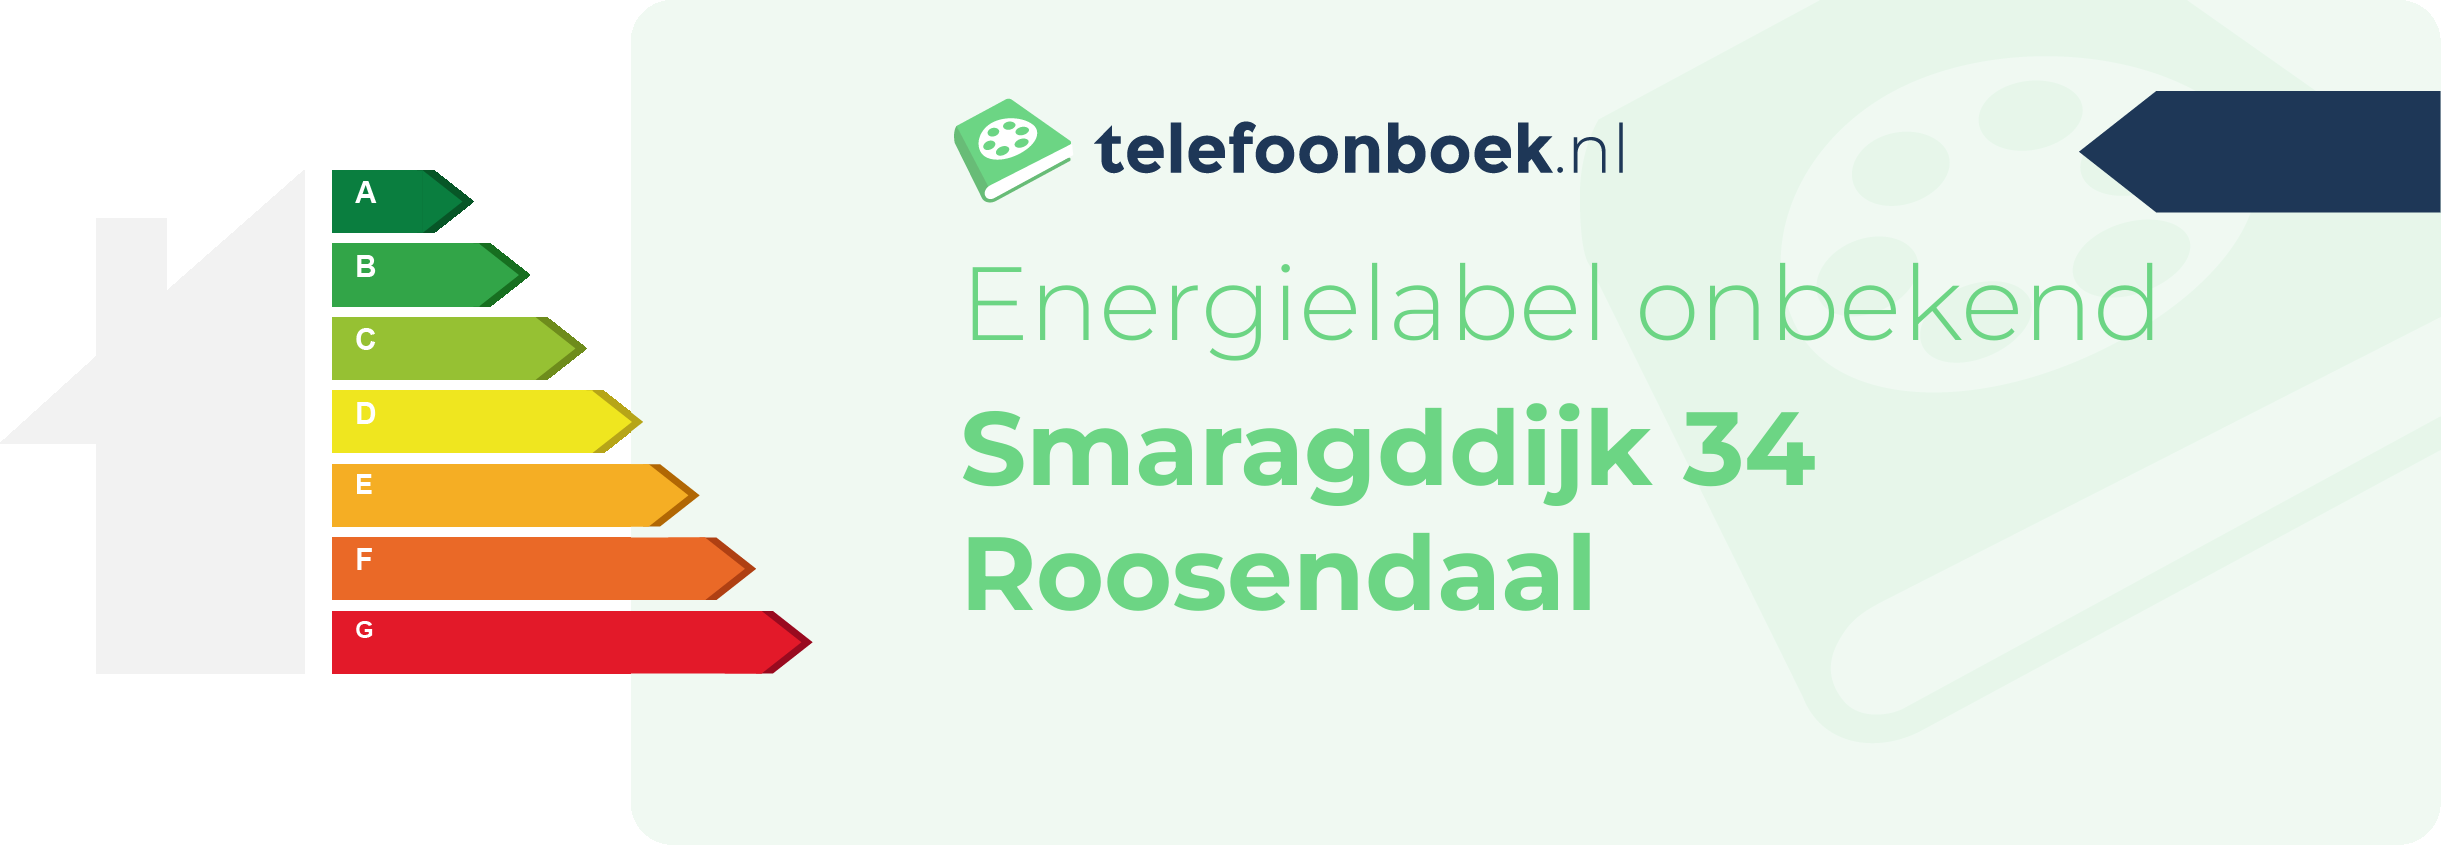 Energielabel Smaragddijk 34 Roosendaal